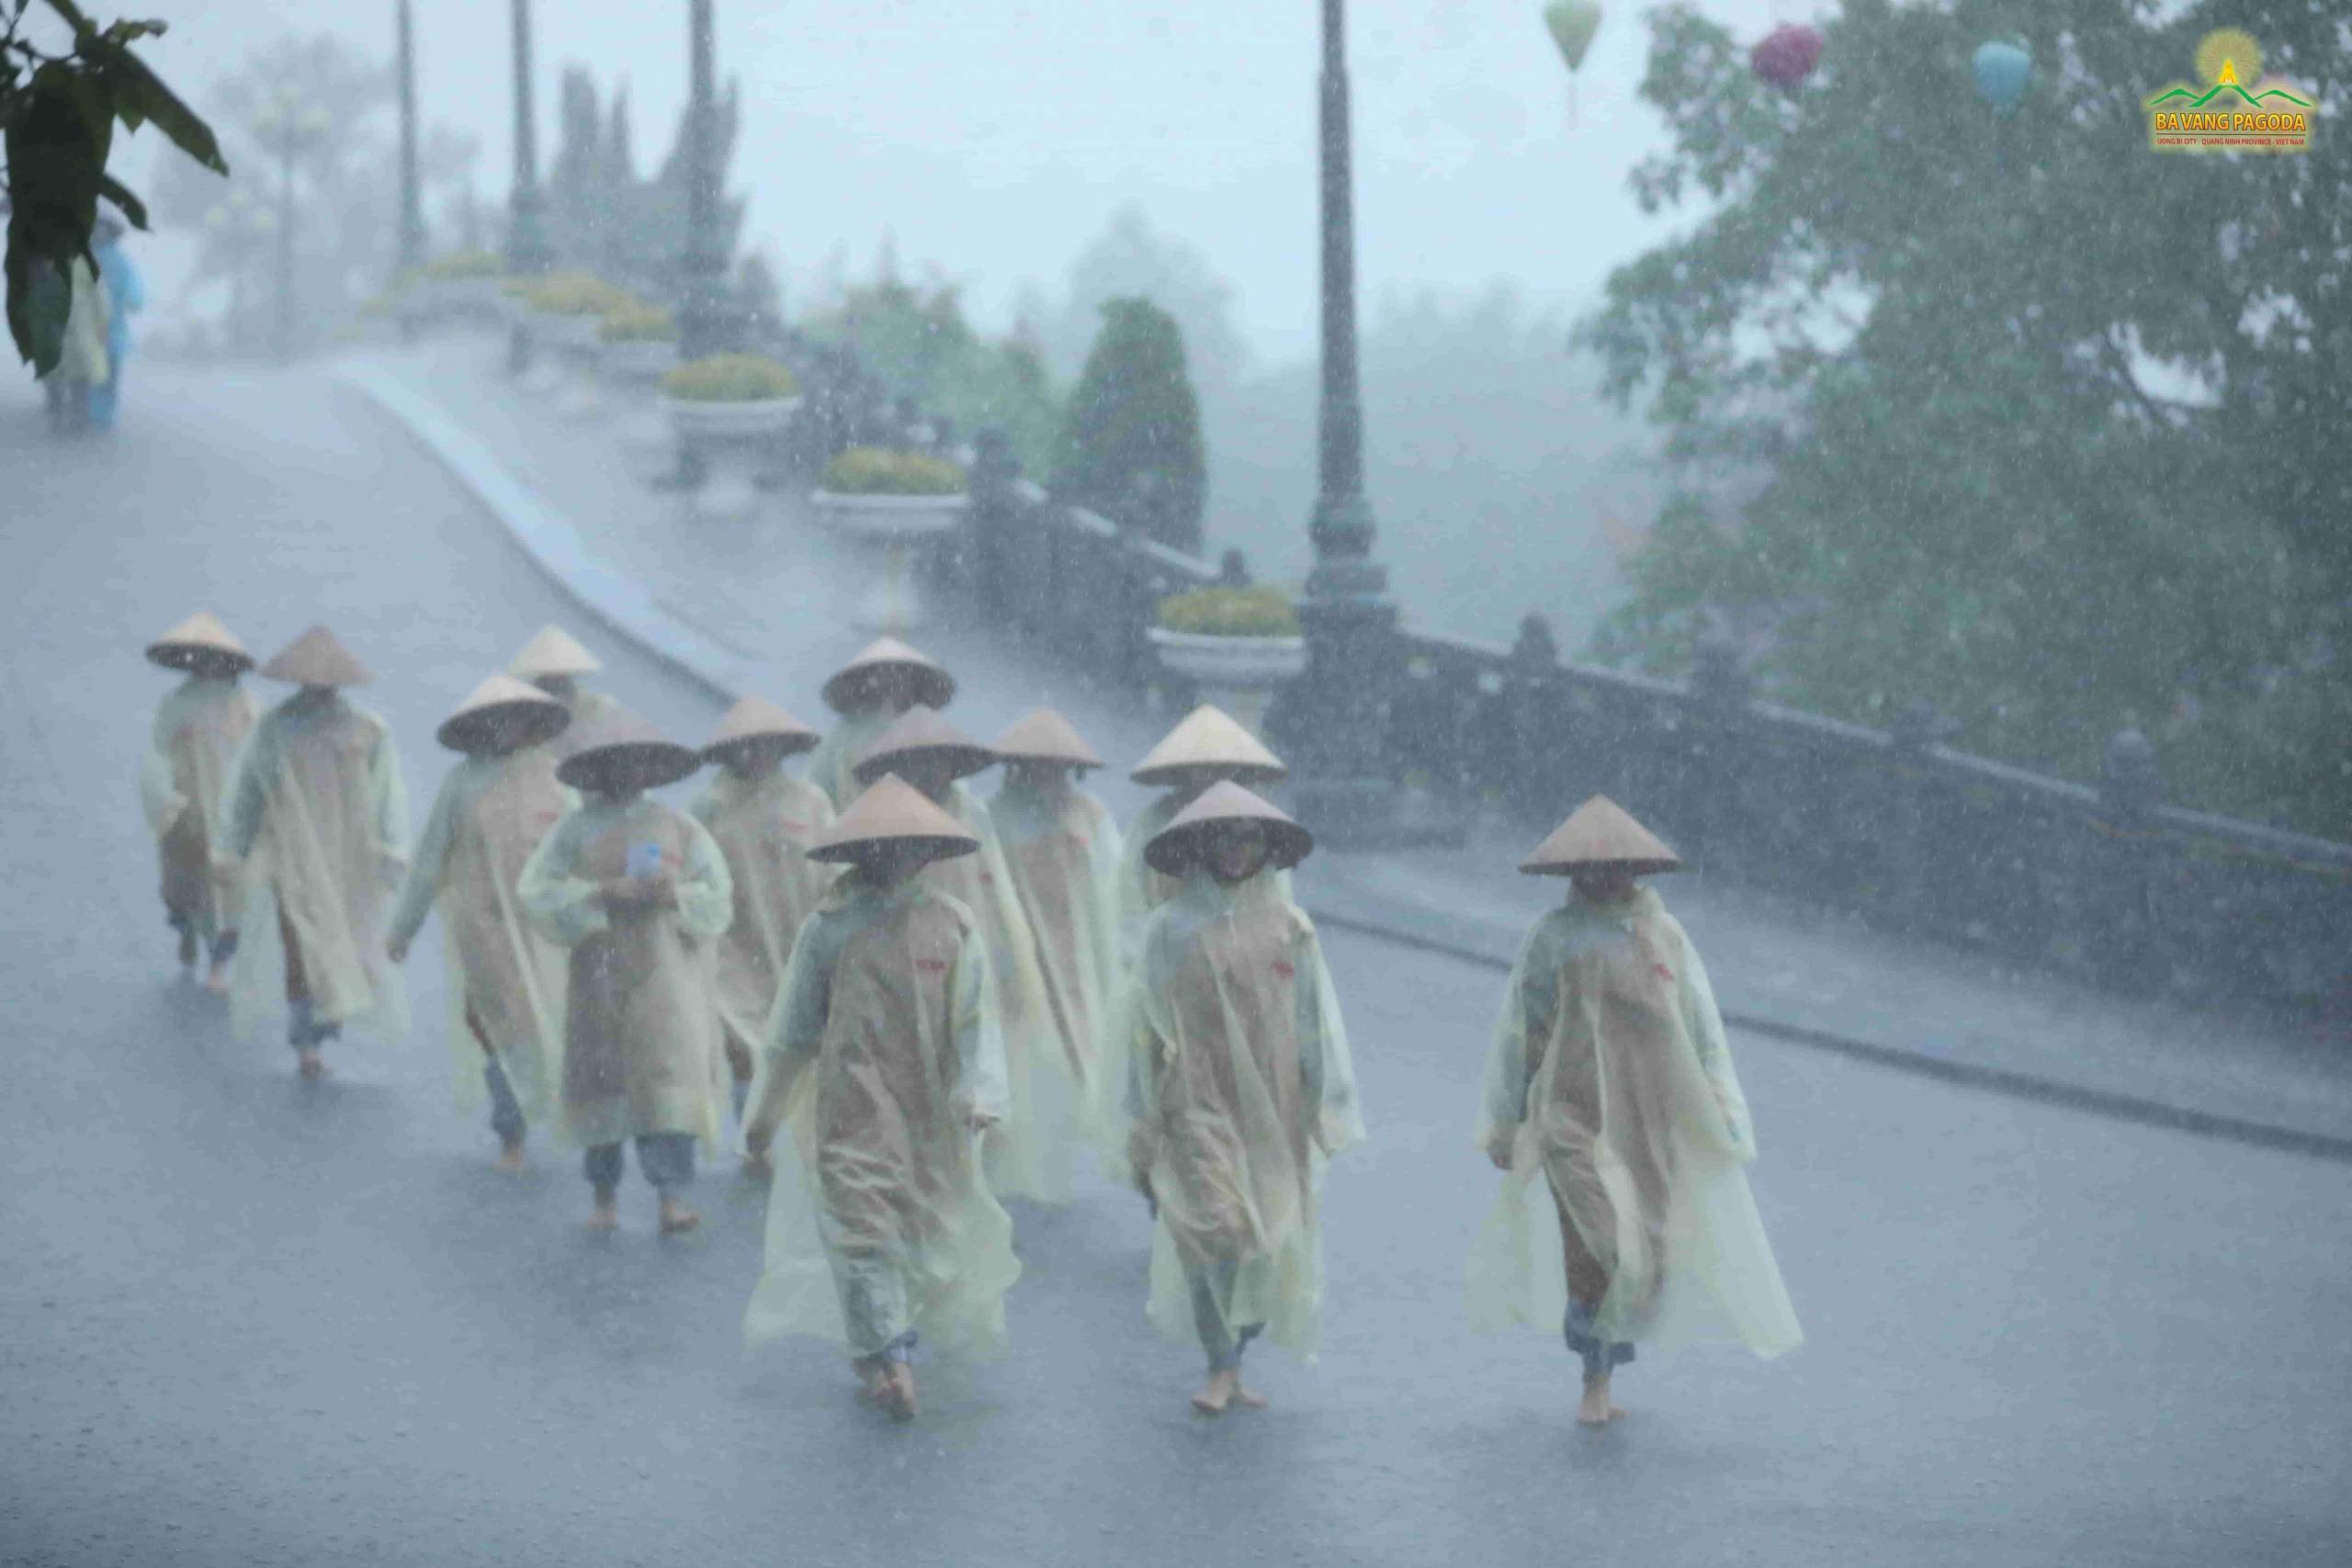 Nuns of Ba Vang Pagoda doing walking meditation in the pouring rain.